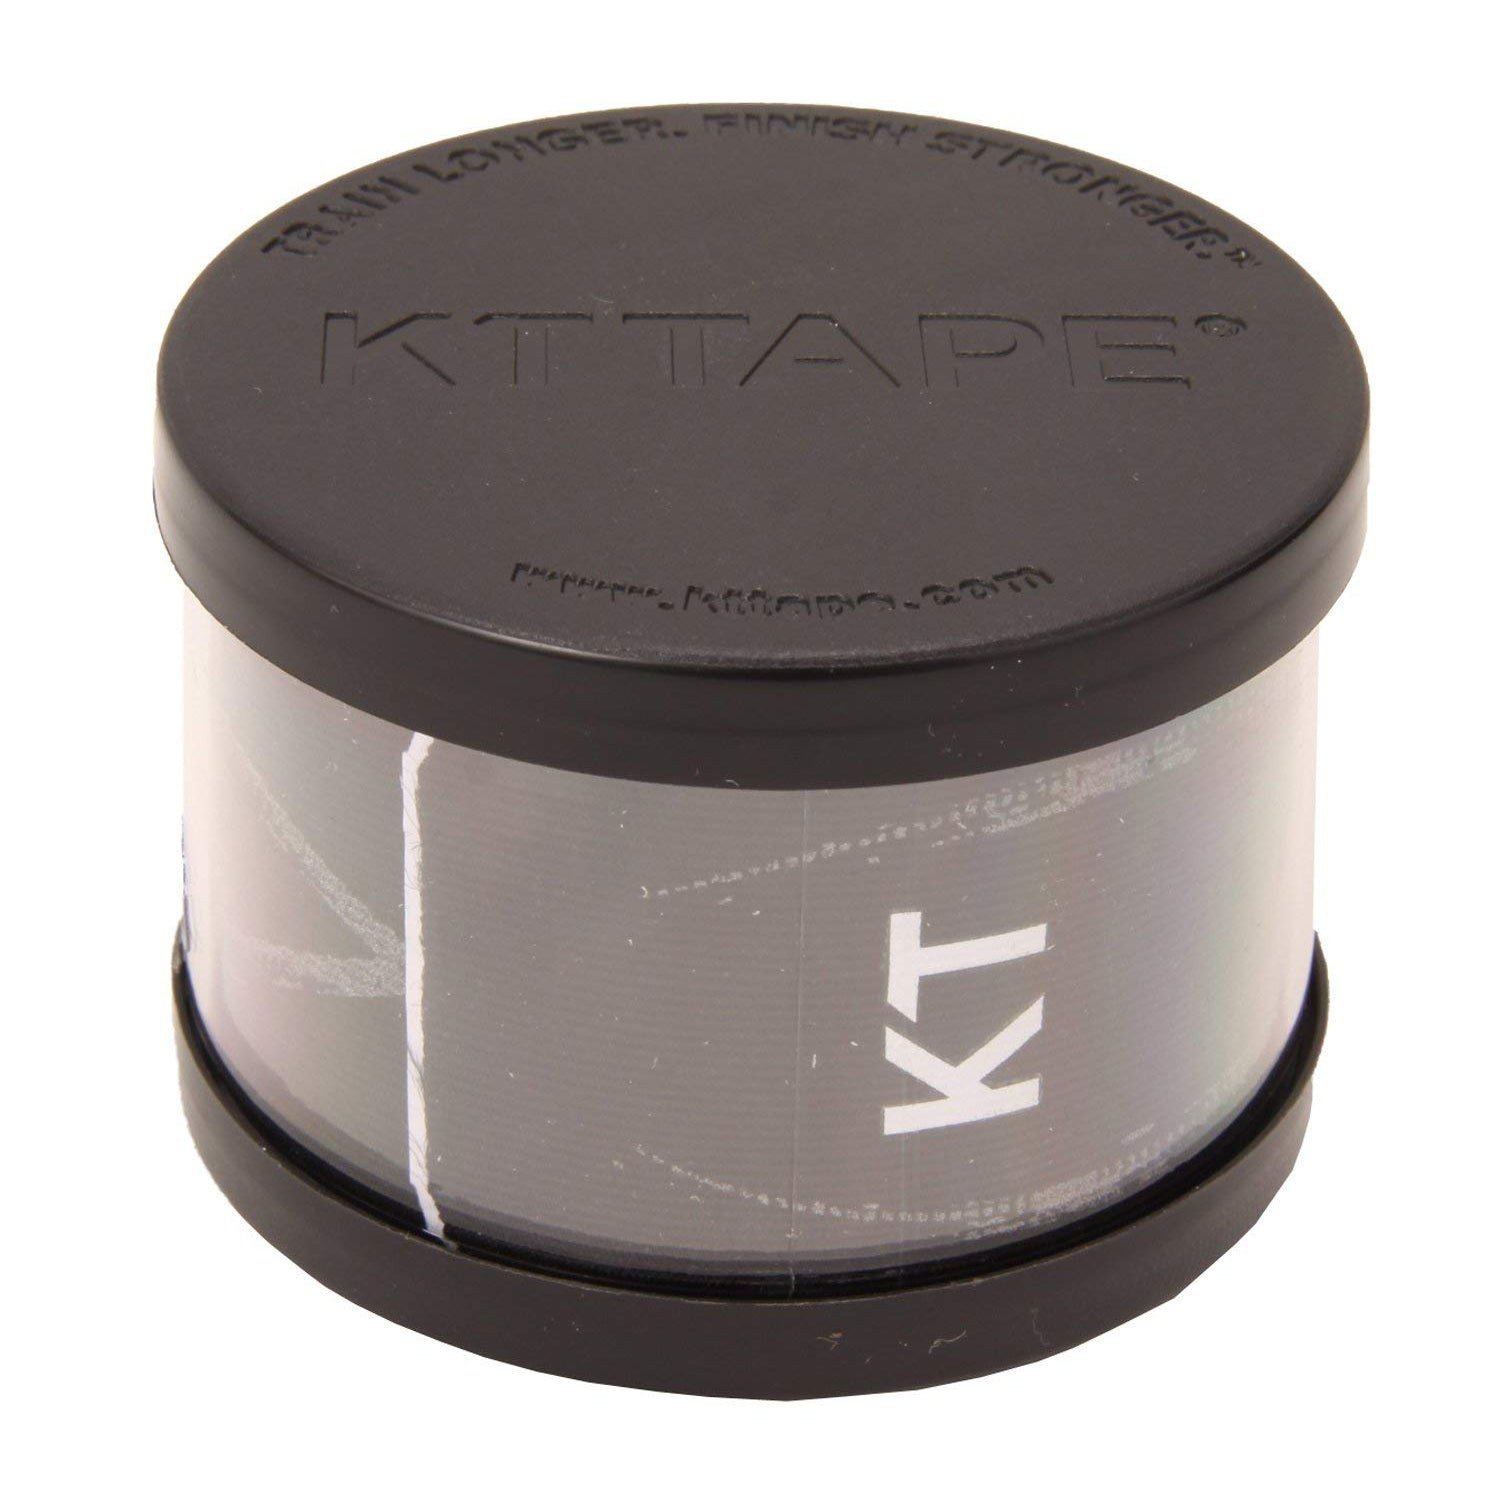 Li-Ning KT Tape Extreme Kinesiology Therapeutic Supporter 20 Strips (5cm X 5cm) - JetBlack - Best Price online Prokicksports.com